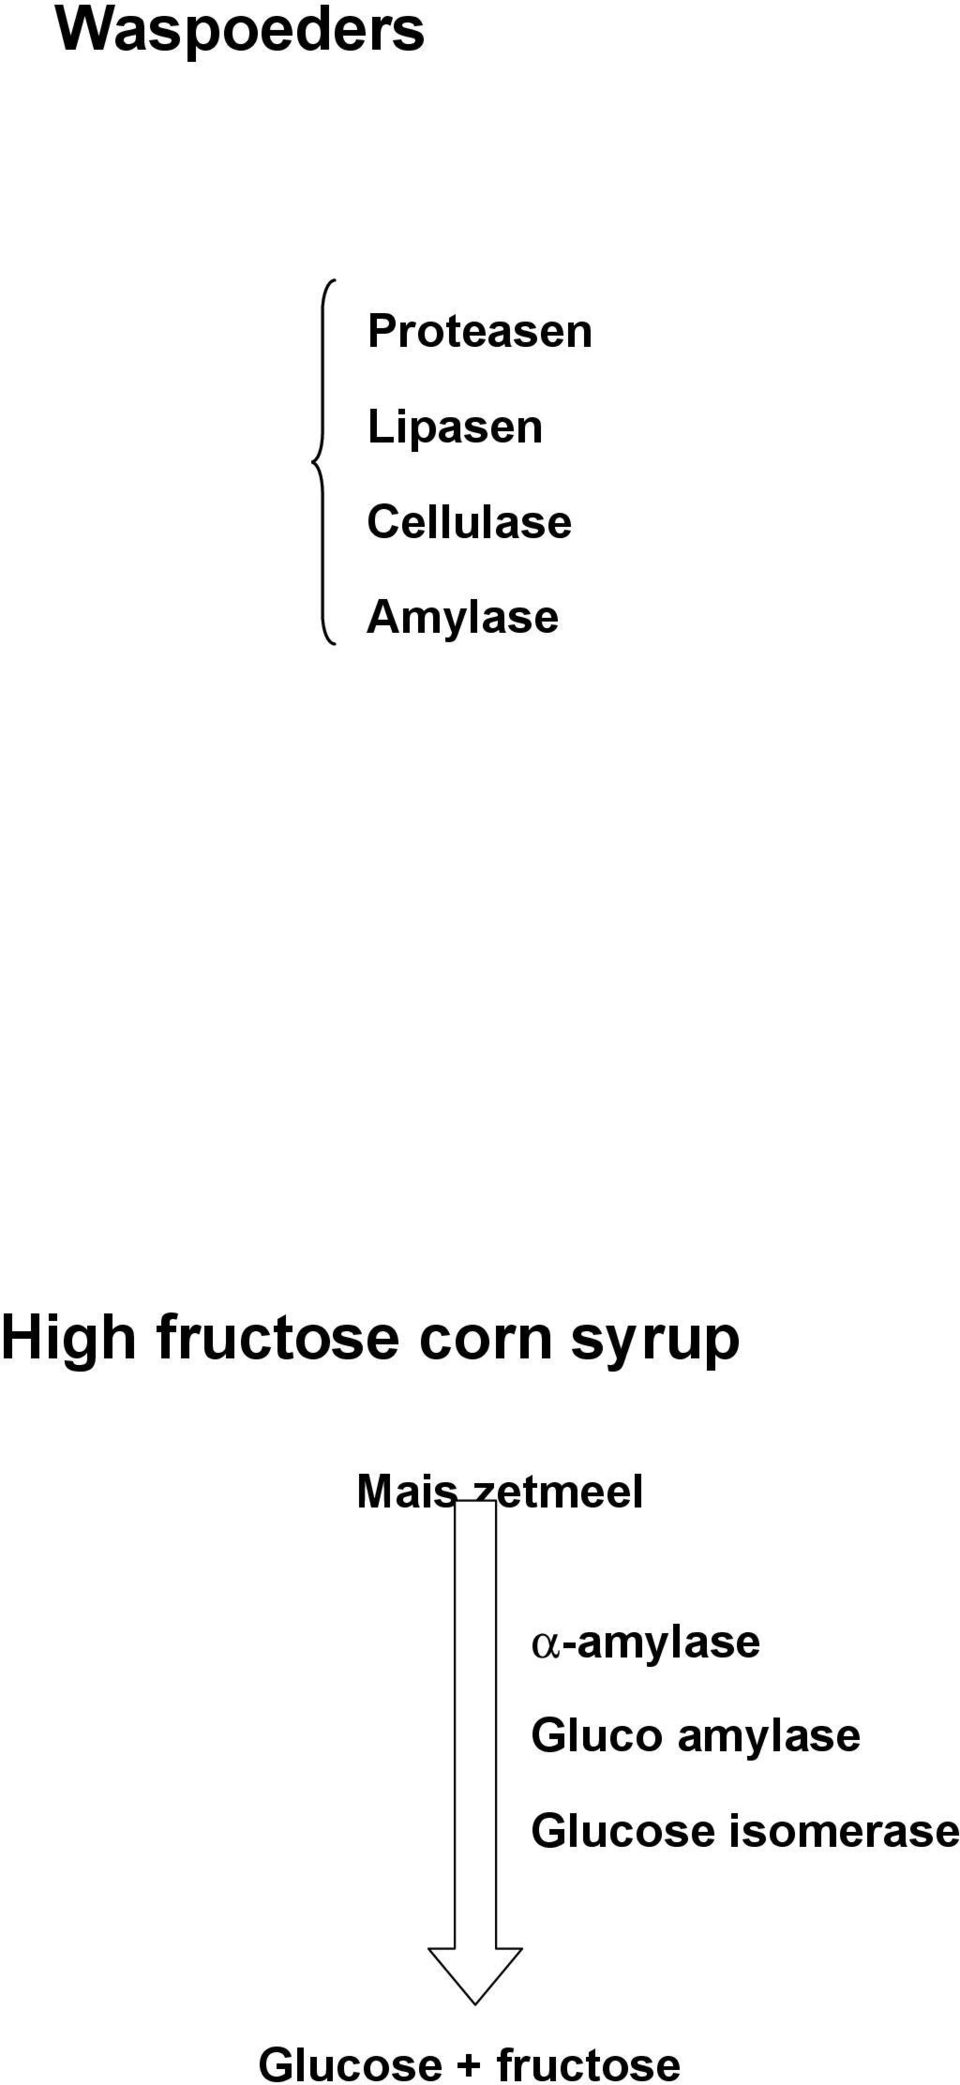 syrup Mais zetmeel a-amylase Gluco